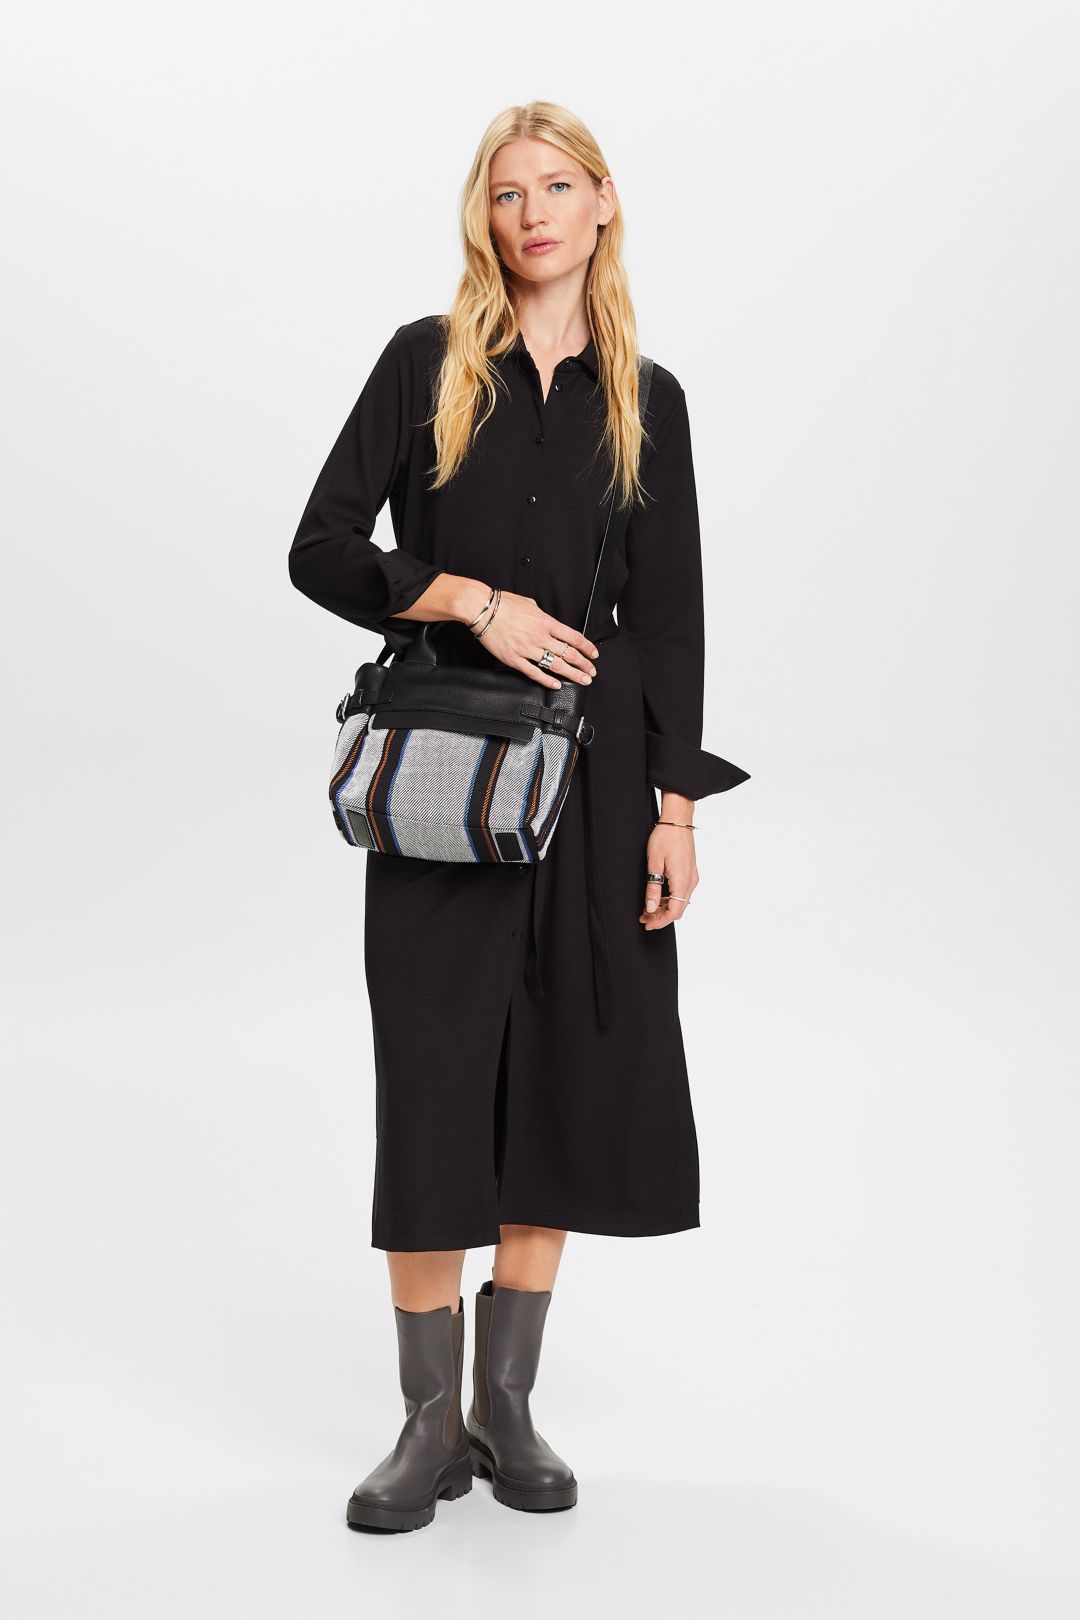 Esprit Woman Blouse Dress in Black GOOFASH